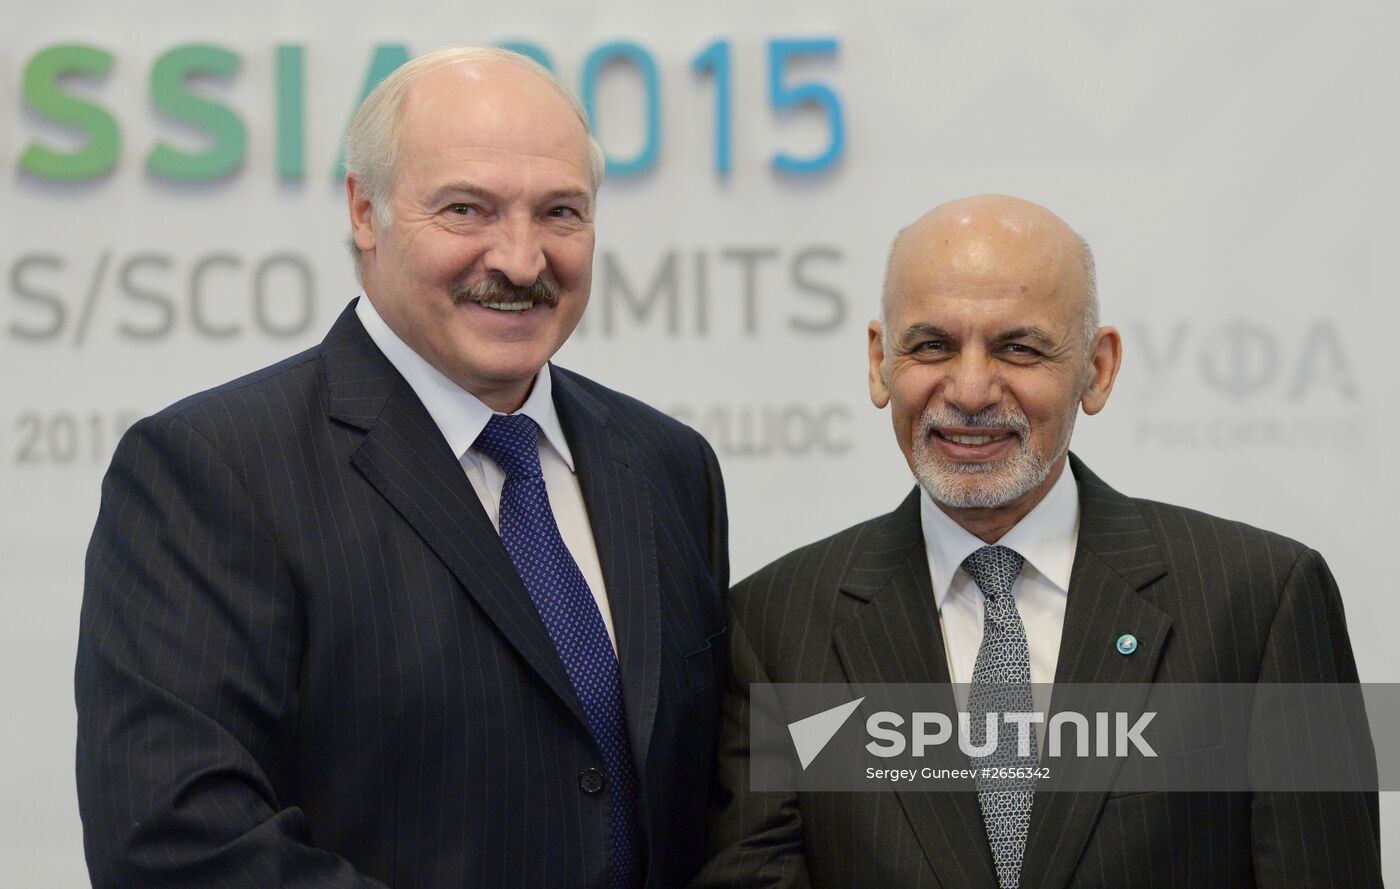 President of the Republic of Belarus Alexander Lukashenko meets with President of the Islamic Republic of Afghanistan Ashraf Ghani Ahmadzai